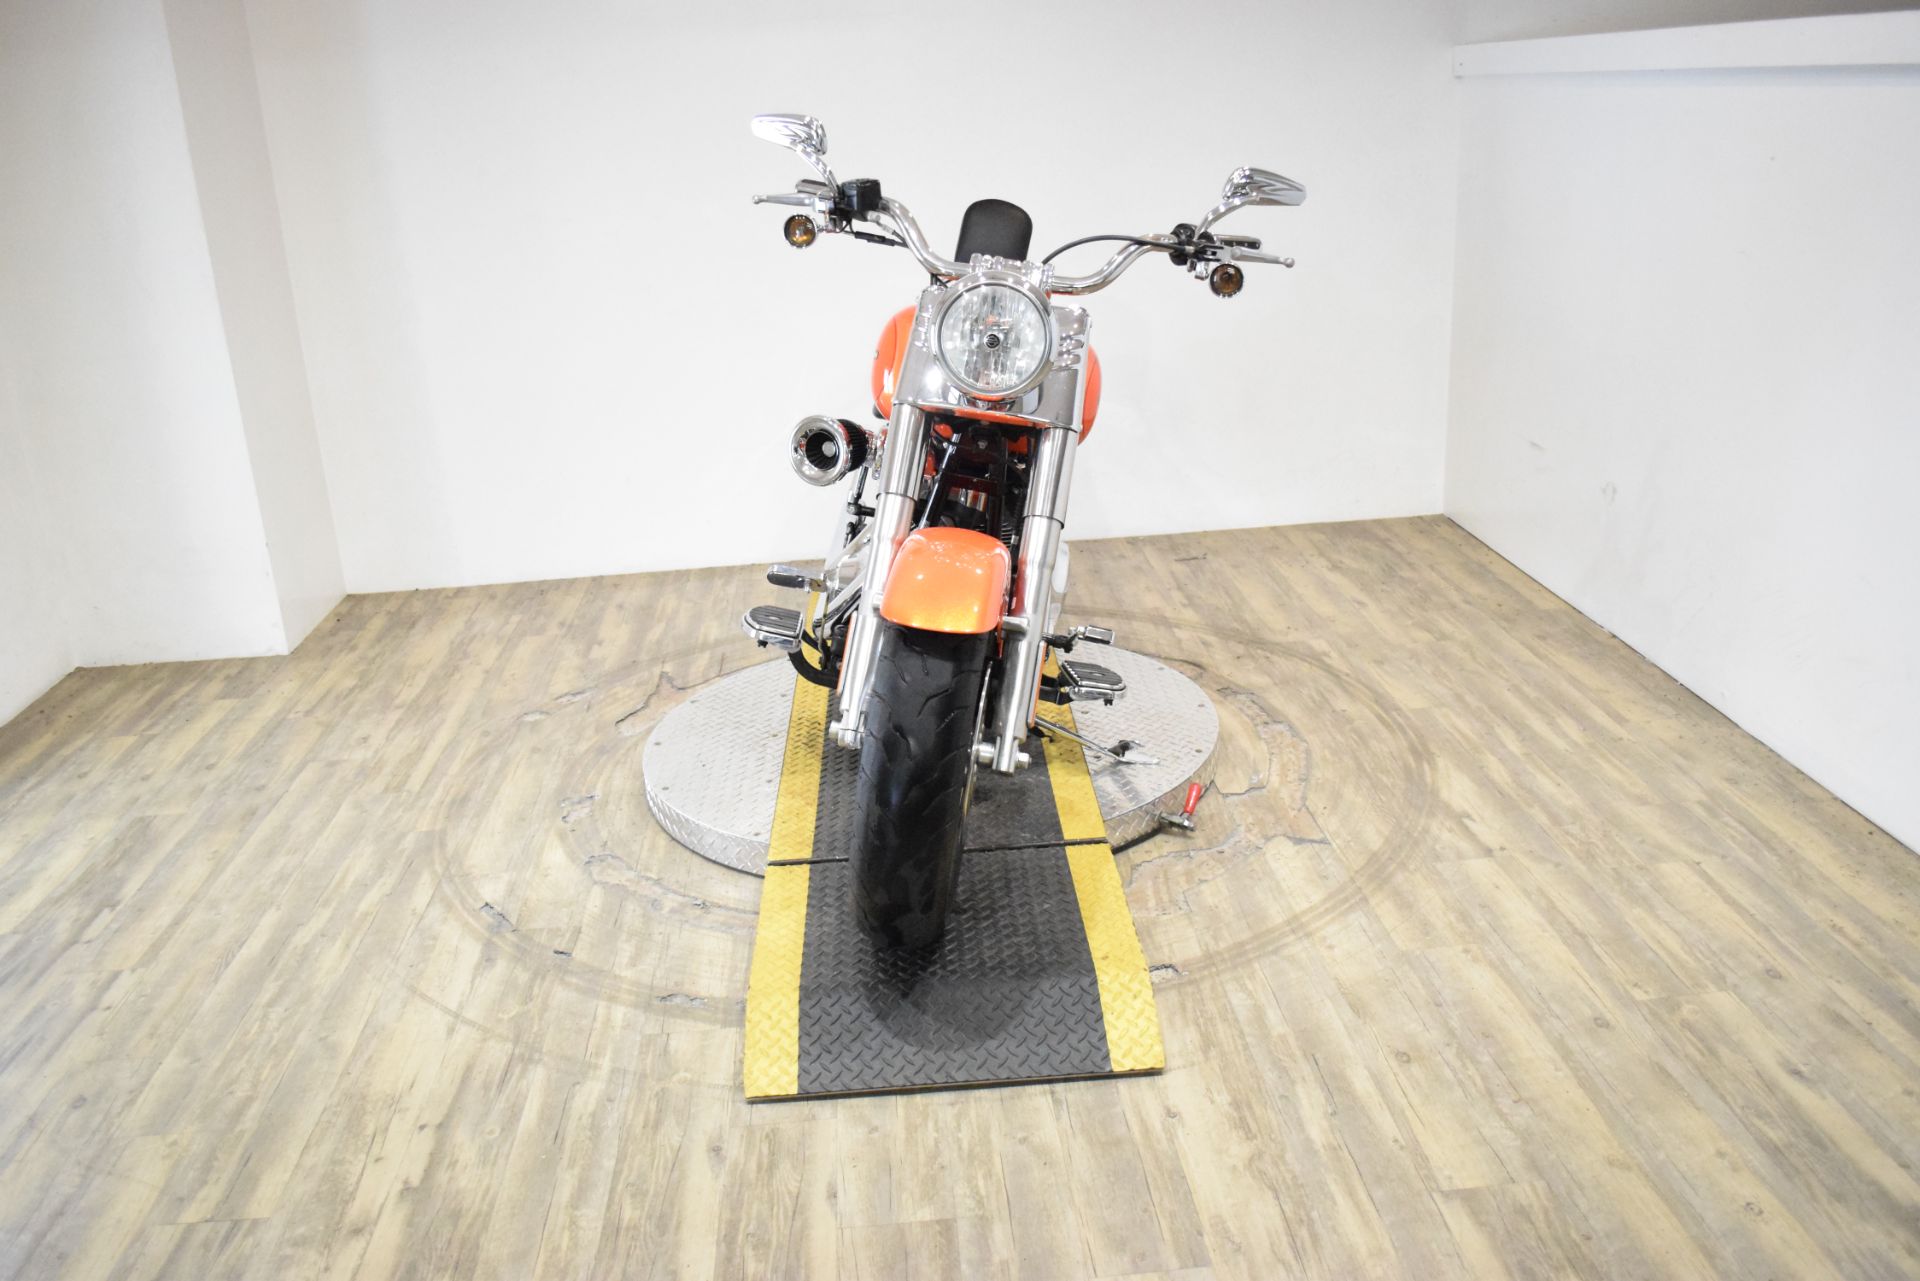 2012 Harley-Davidson Softail® Fat Boy® in Wauconda, Illinois - Photo 10